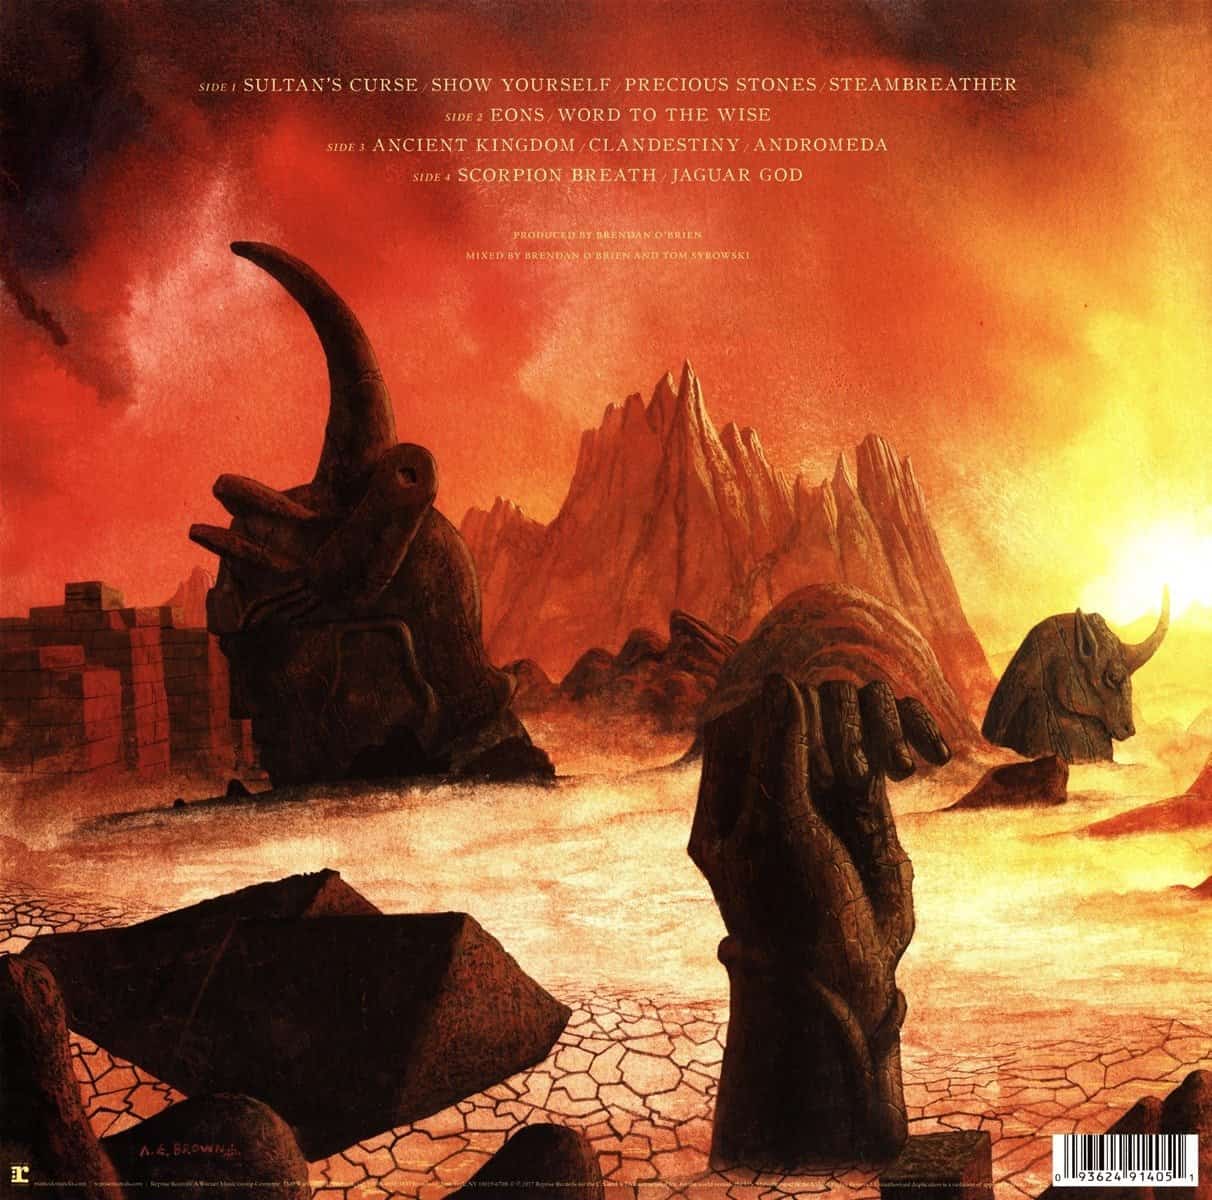 Mastodon-Emperor-of-Sand-vinyl-record-album-back